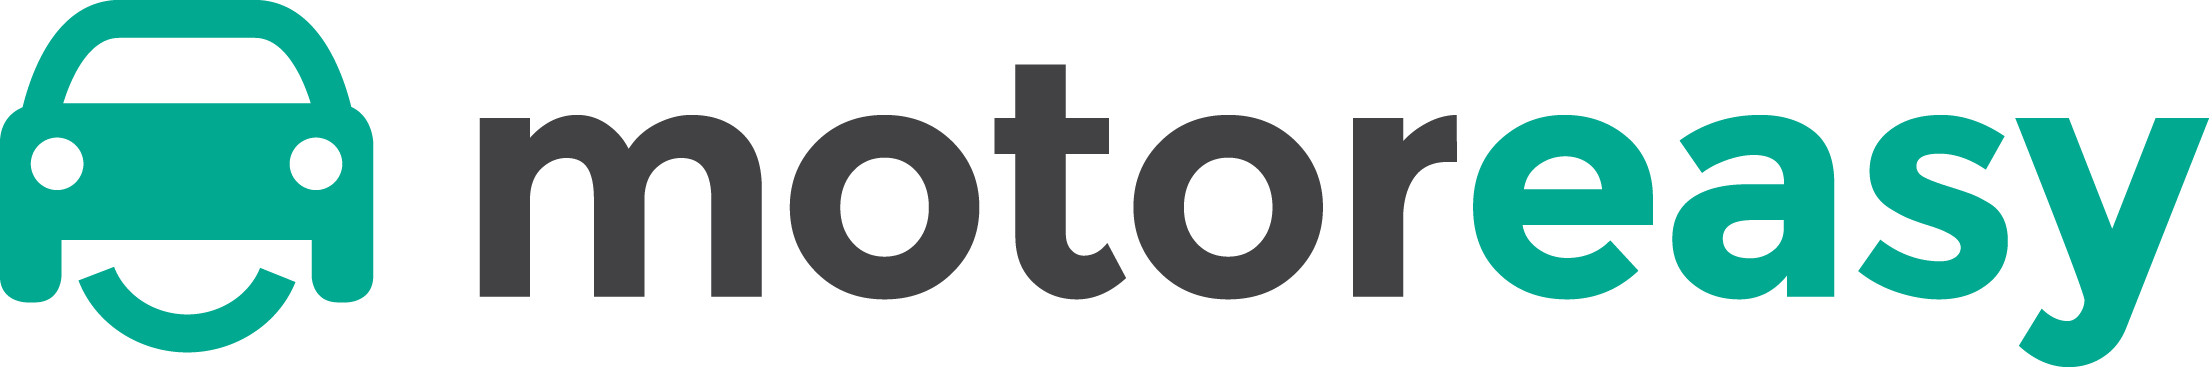 Motoreasy Logo